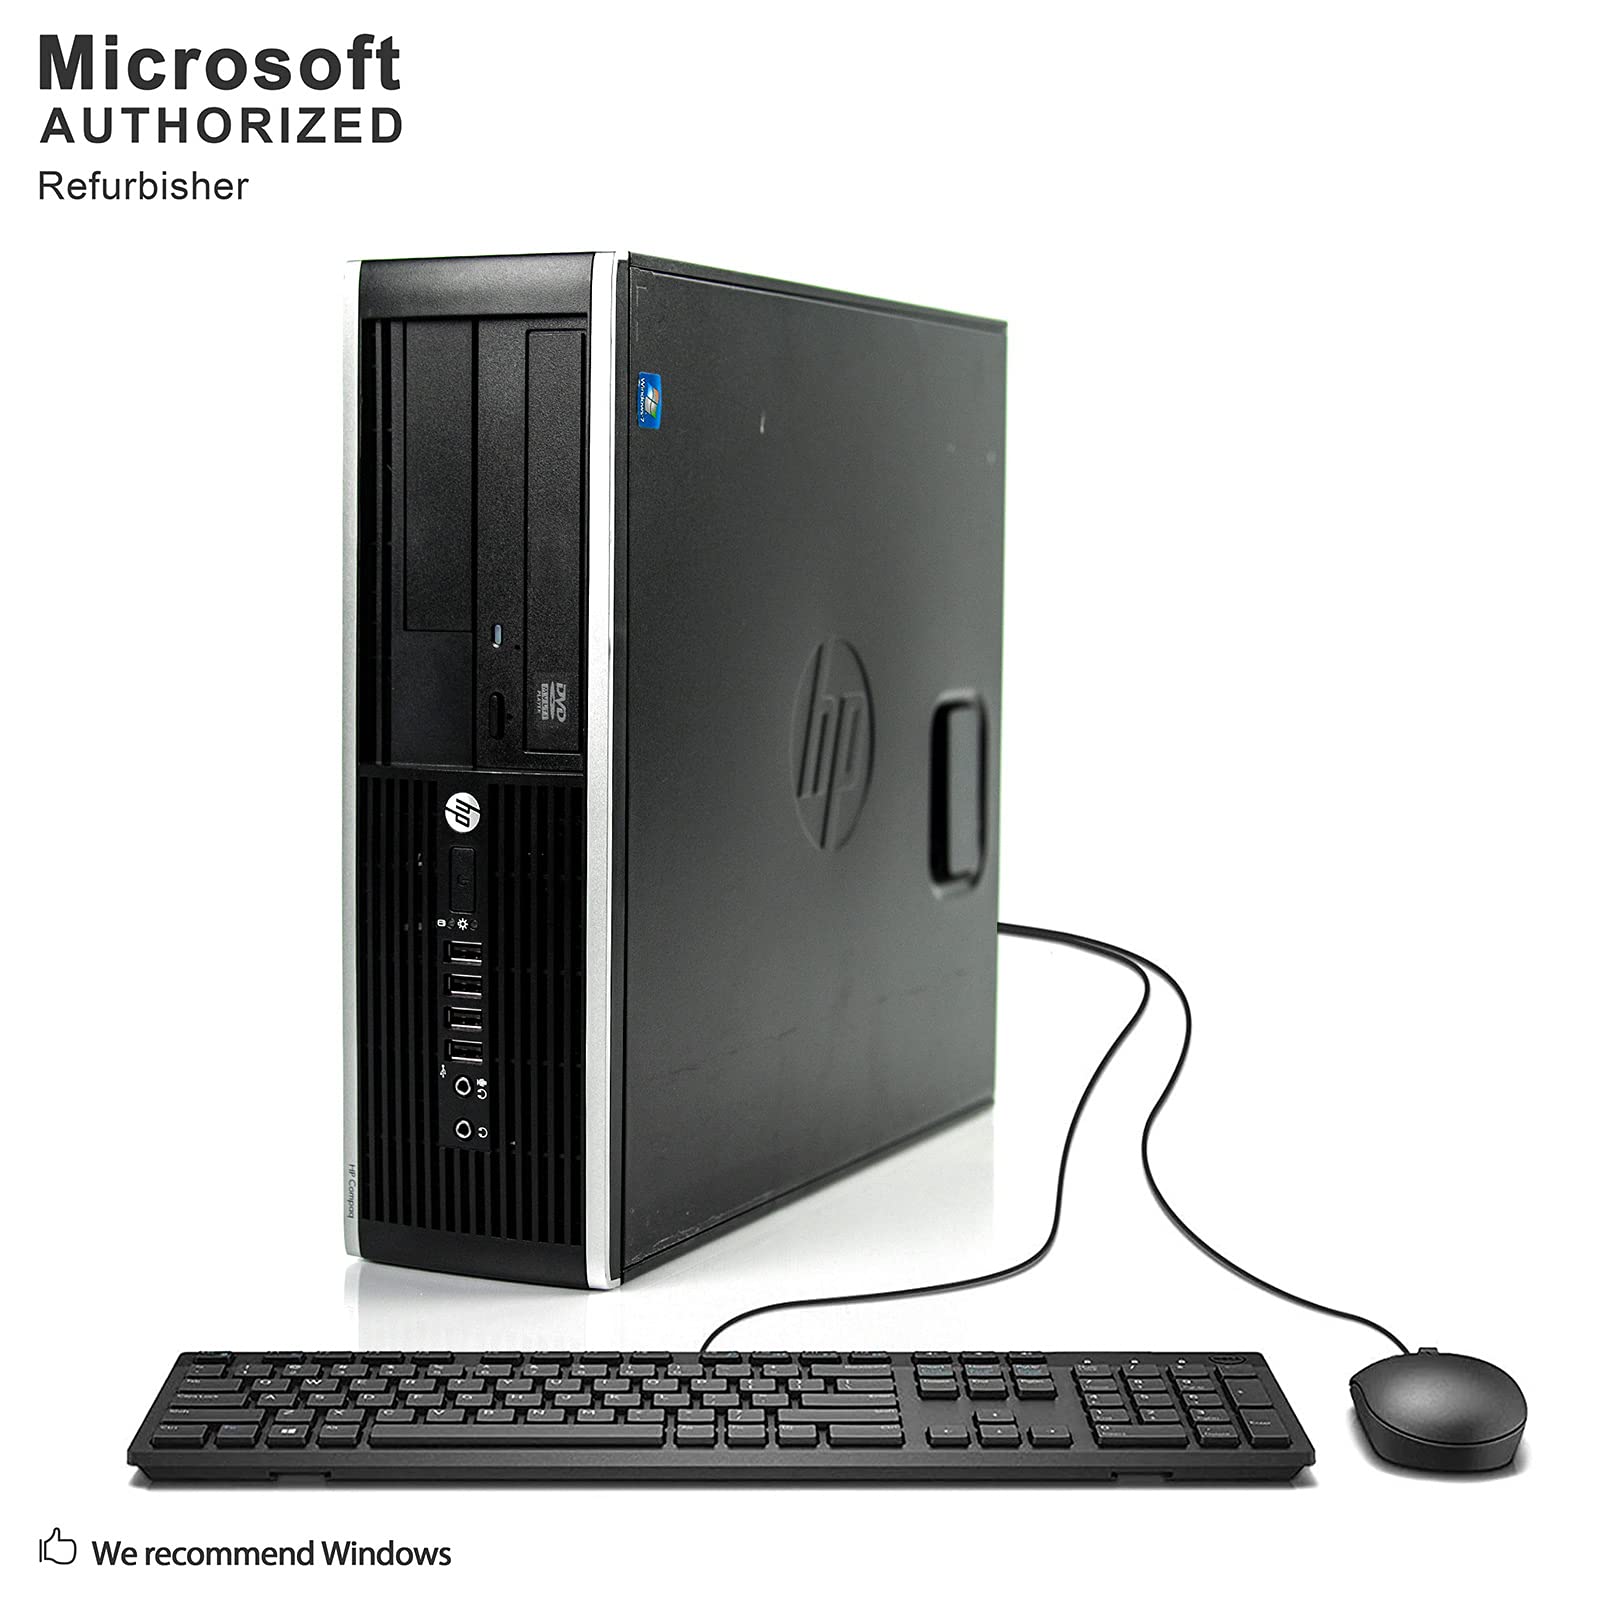 HP Elite Desktop Computer, Intel Core i5 3.1GHz, 8GB RAM, 1TB SATA HDD, Keyboard & Mouse, Wi-Fi, Dual 19in LCD Monitors (Brands Vary), DVD-ROM, Windows 10, (Renewed)